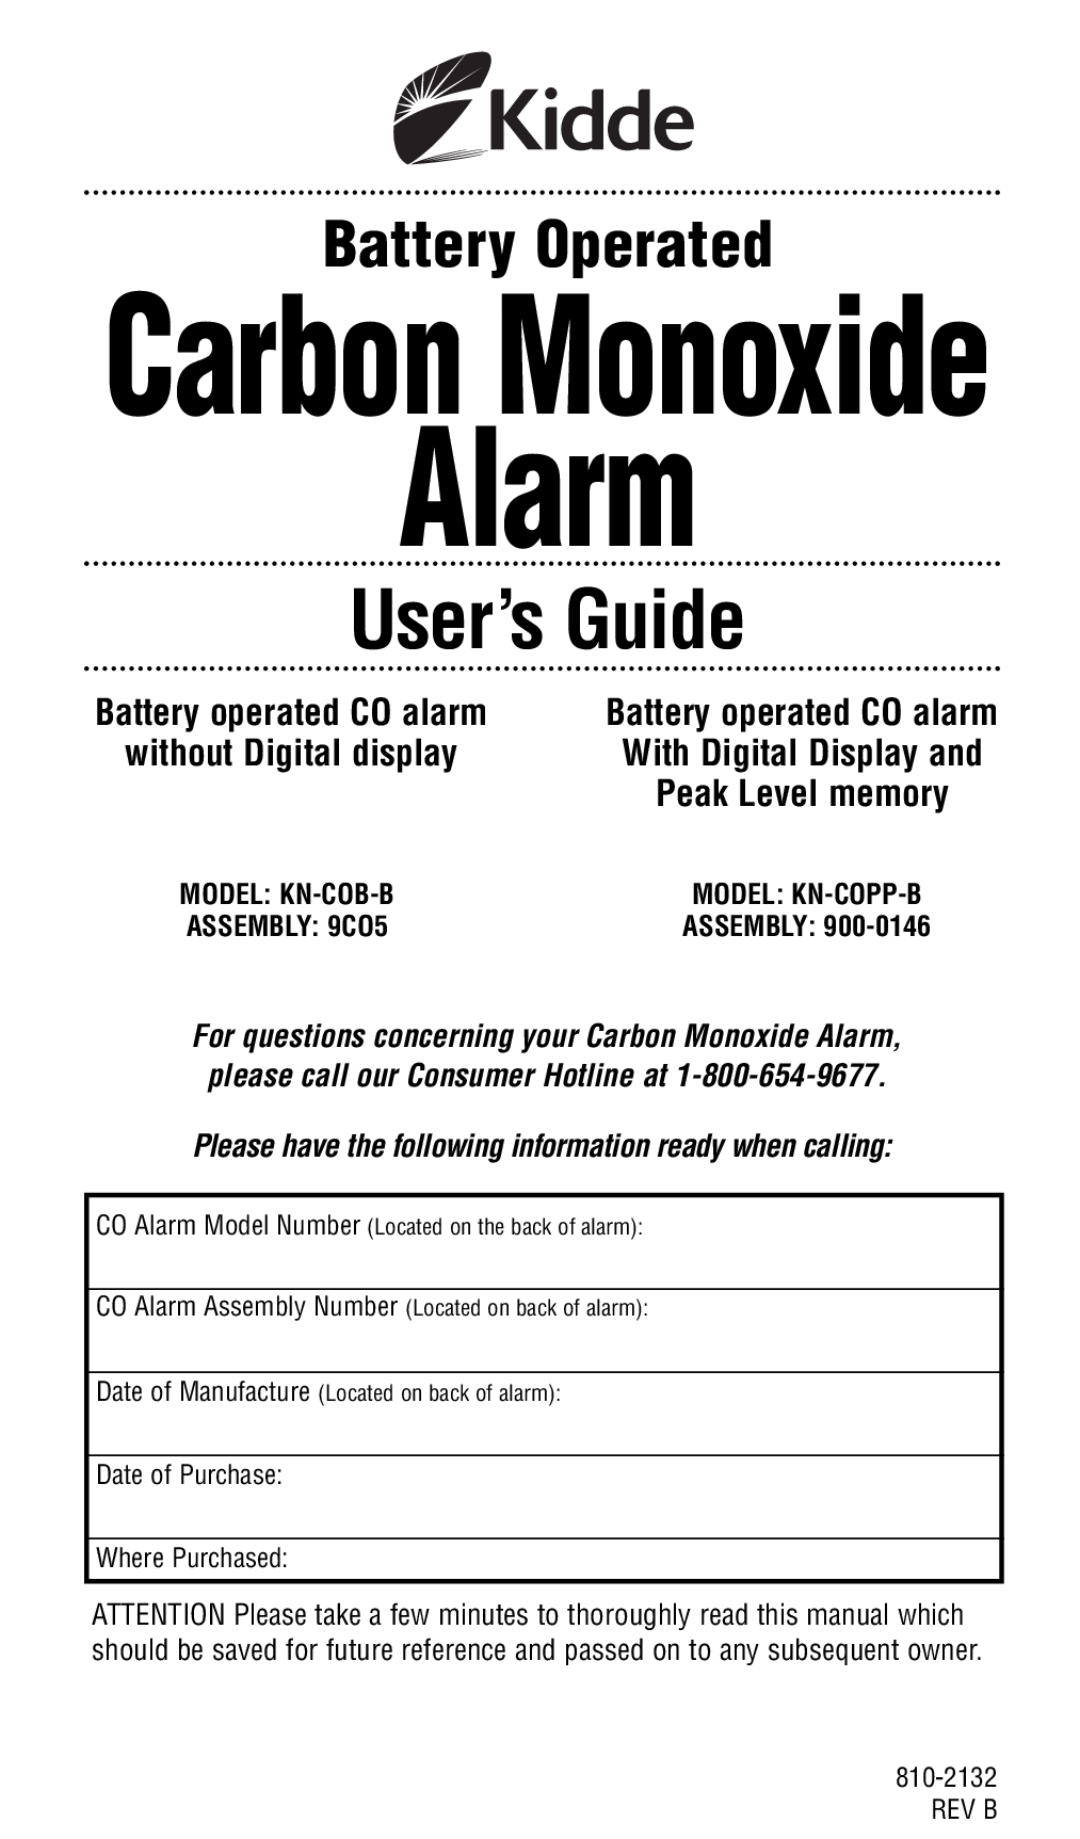 Kidde KN-COB-B manual Alarm, Carbon Monoxide, User’s Guide, Battery Operated, Peak Level memory, Battery operated CO alarm 